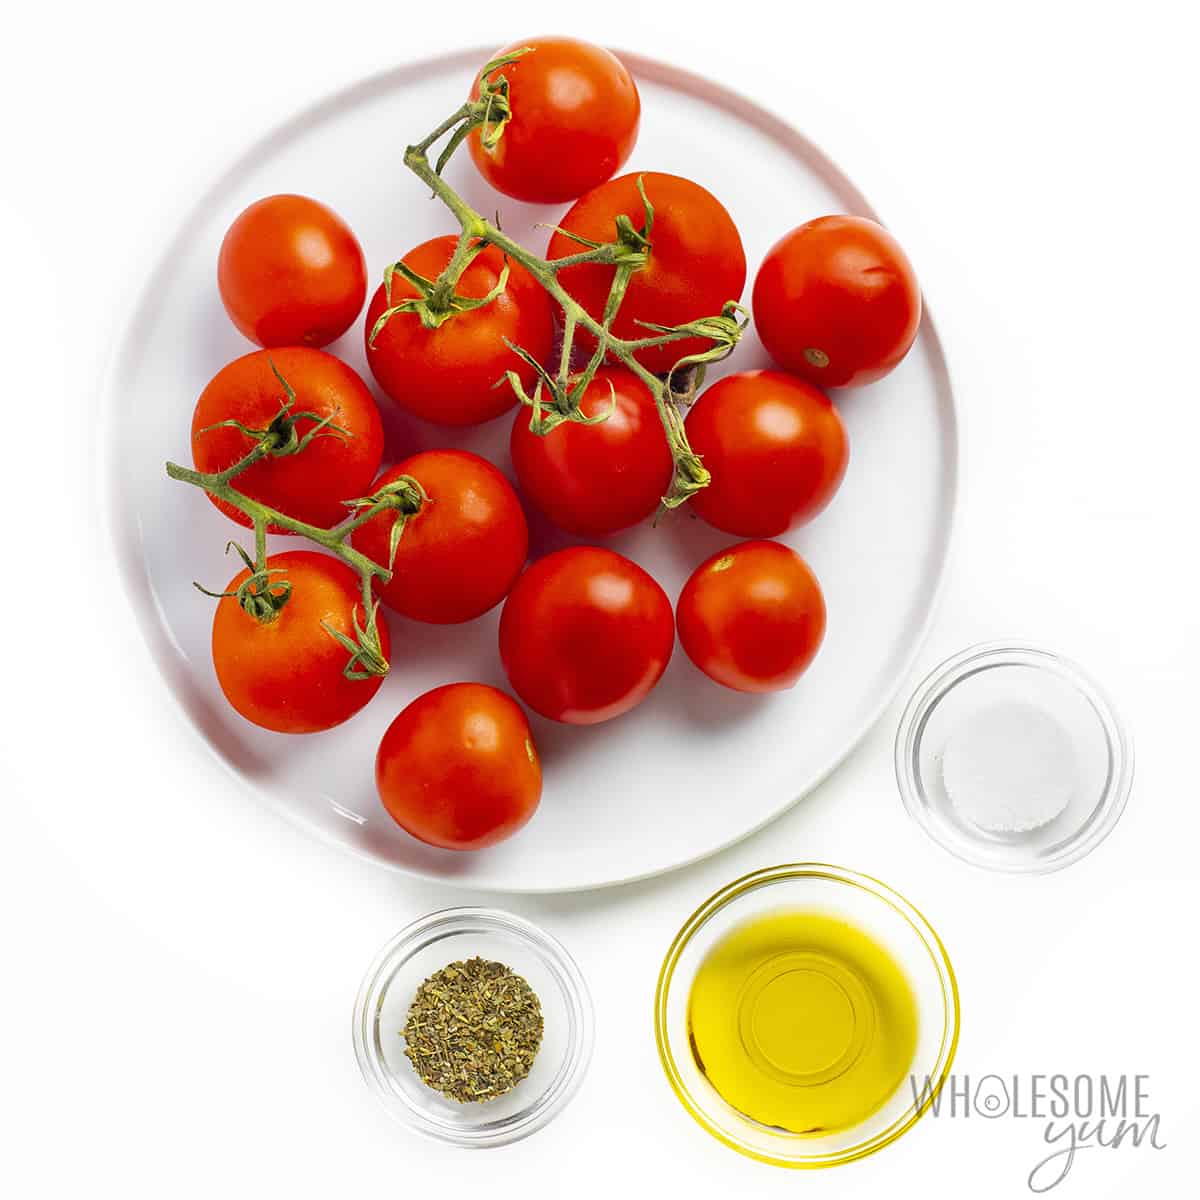 Tomatoes, oil, salt, and seasoning in bowls.